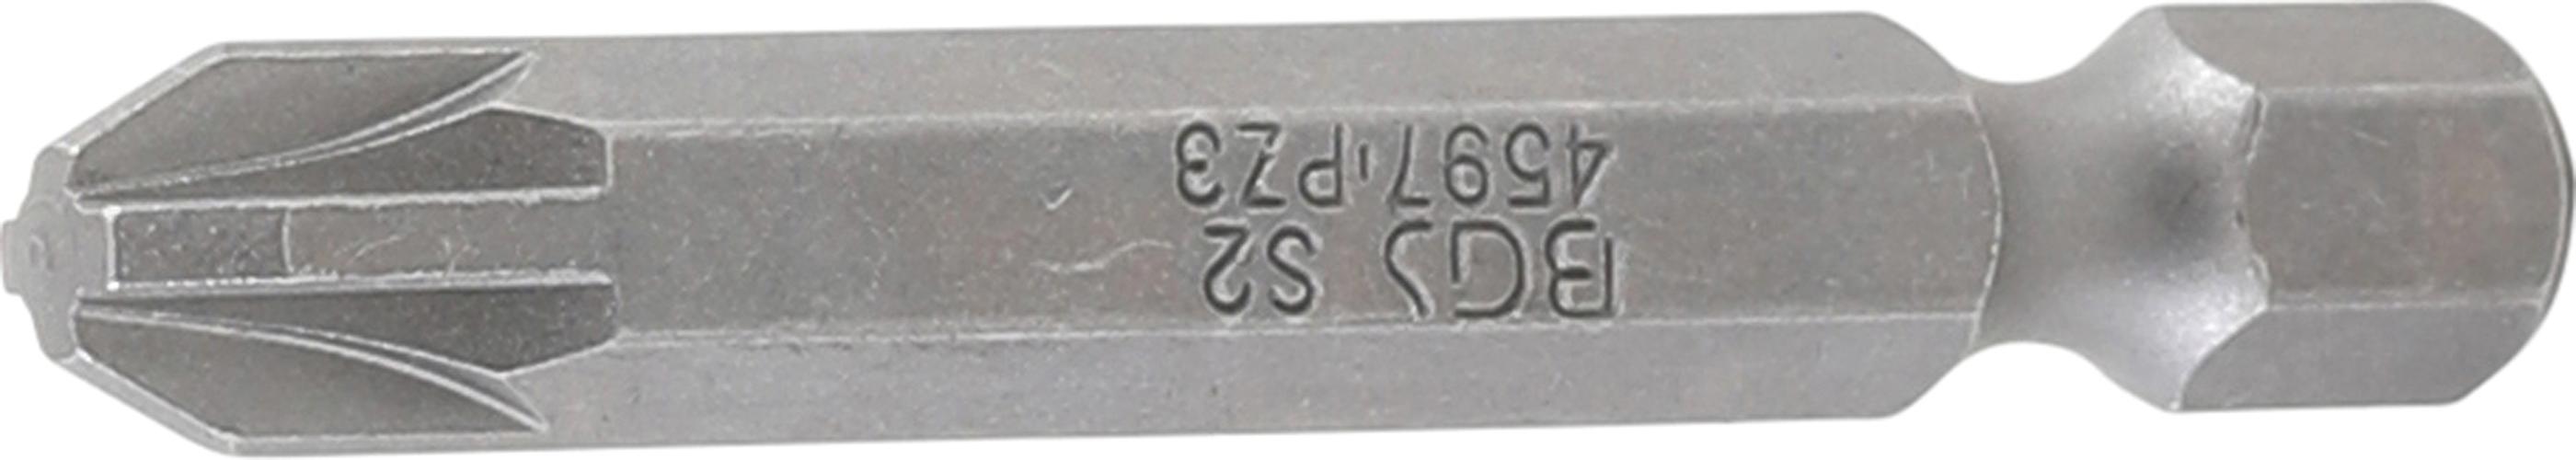 Bit | length 50 mm | 6.3 mm (1/4") drive | Cross slot PZ3 (4597)